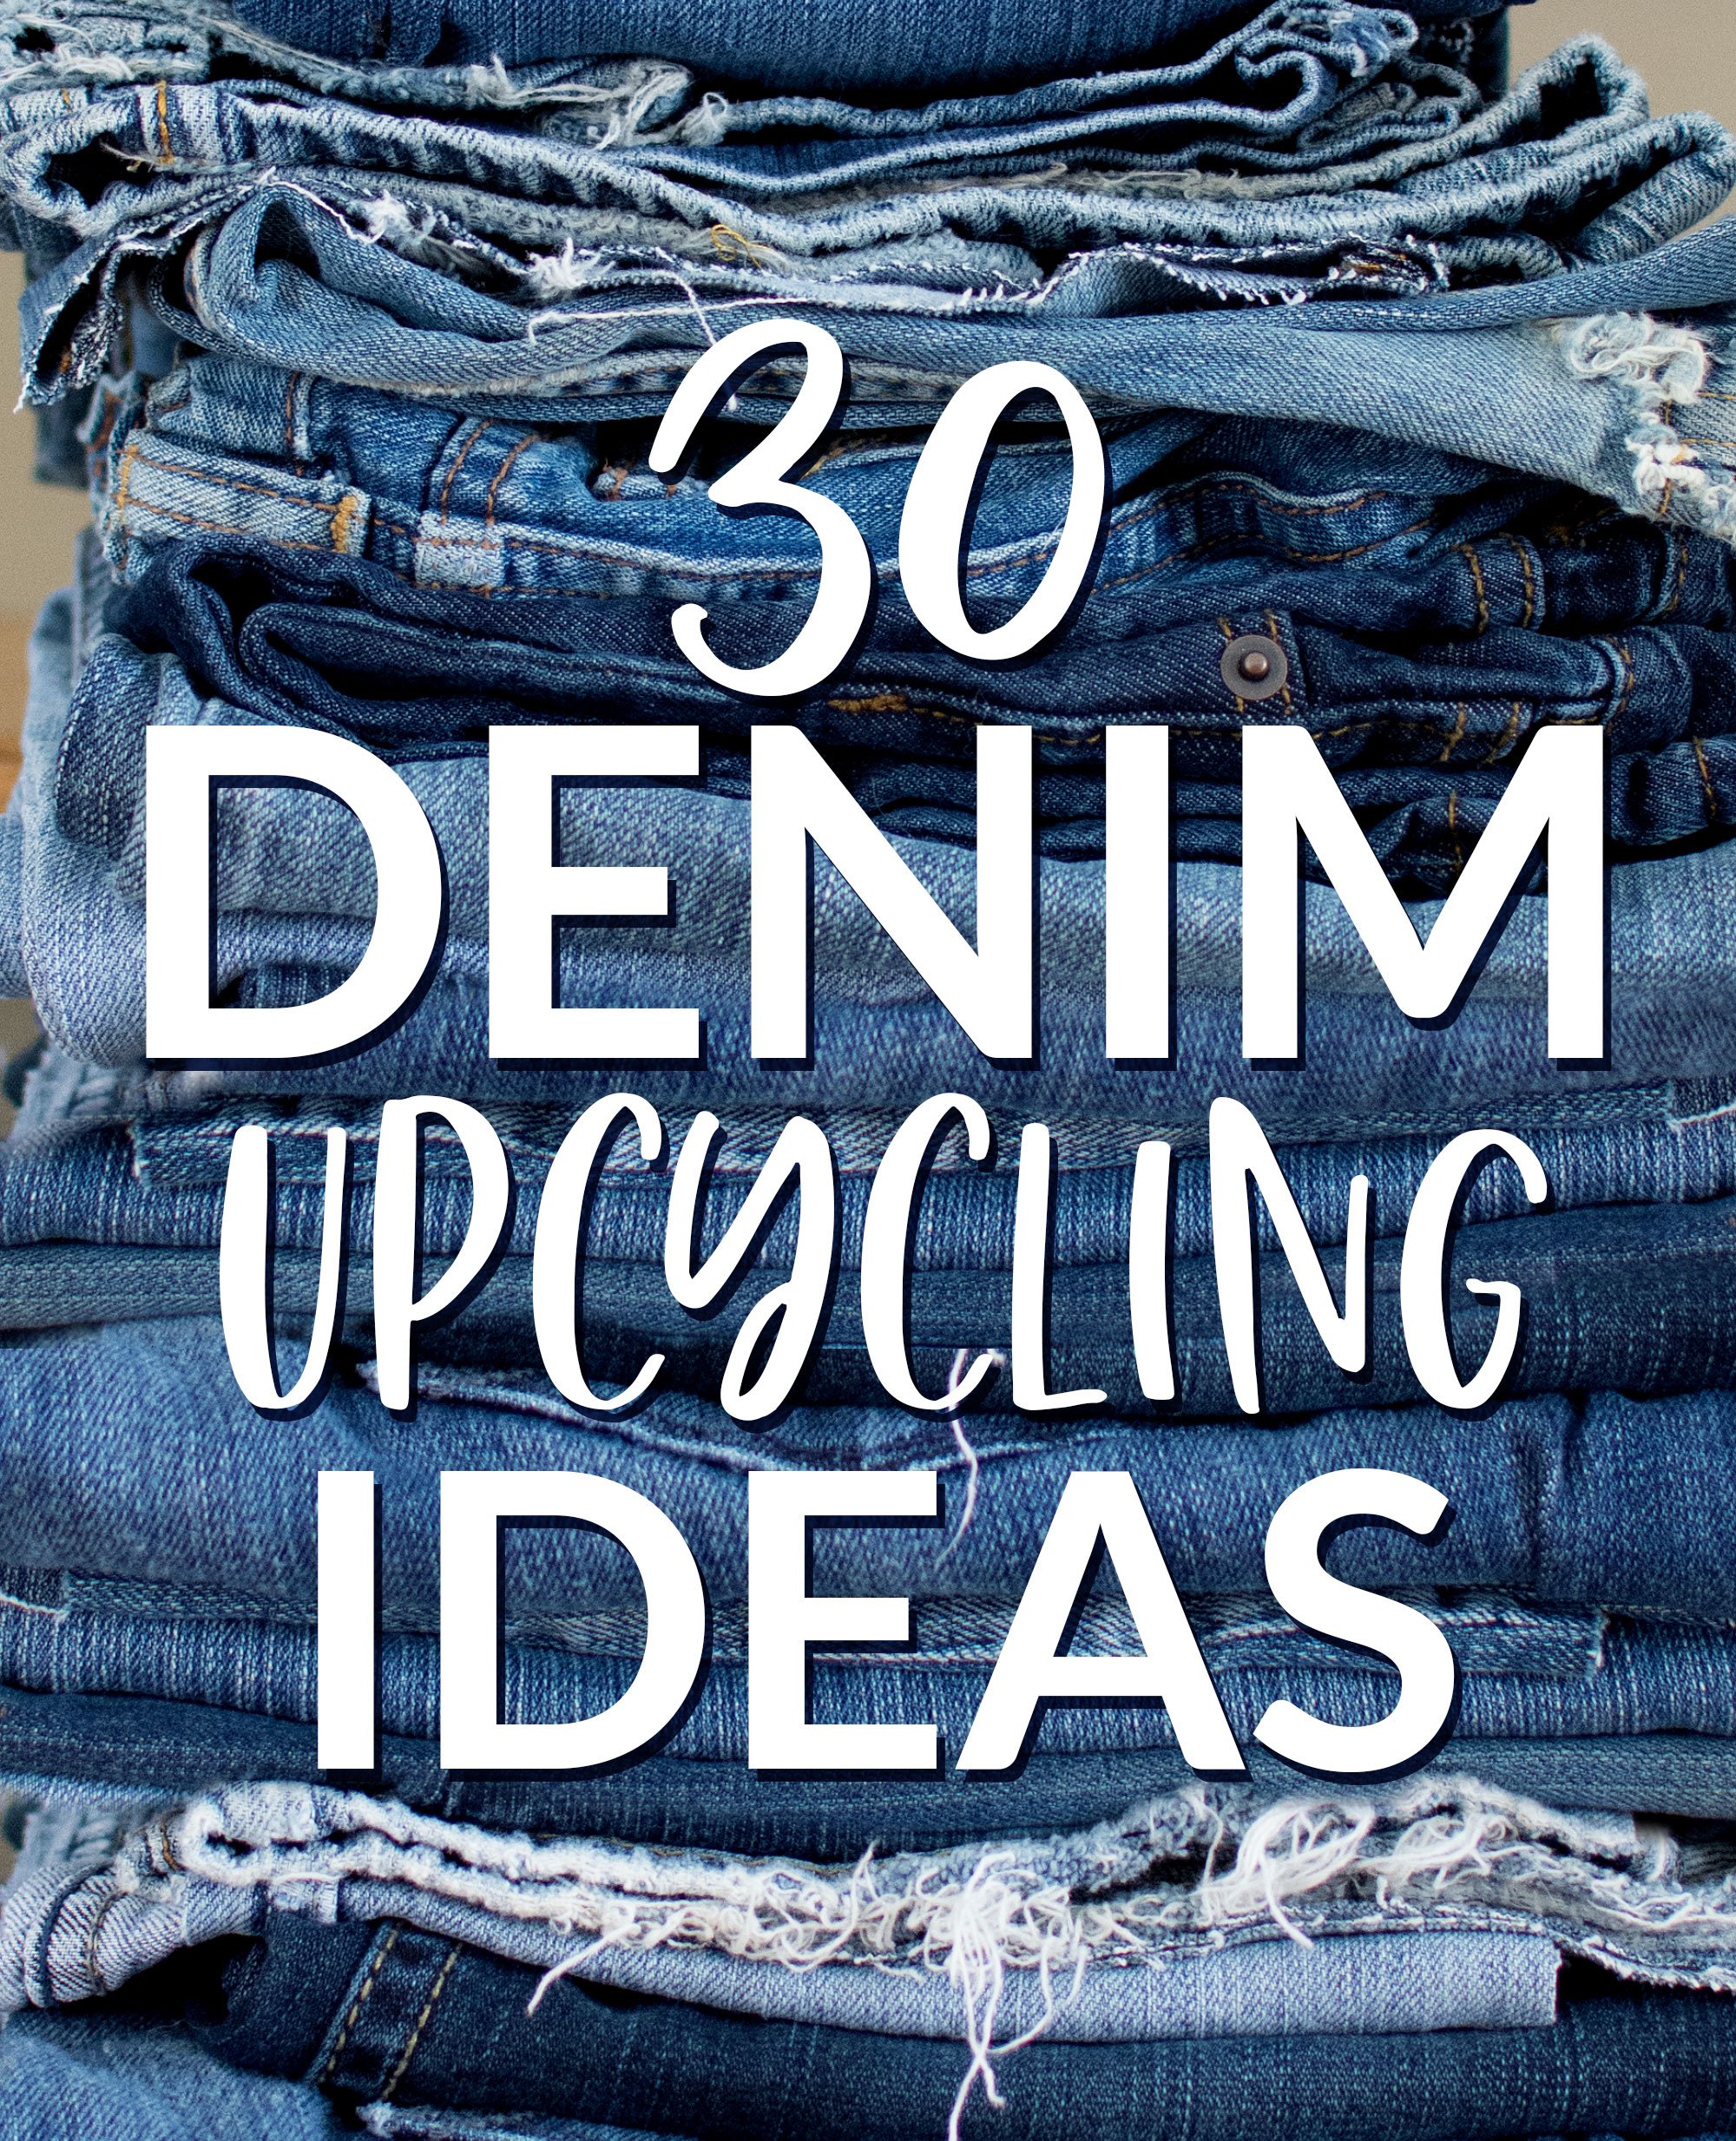 seams from jeans for handmade Denim seams DIY